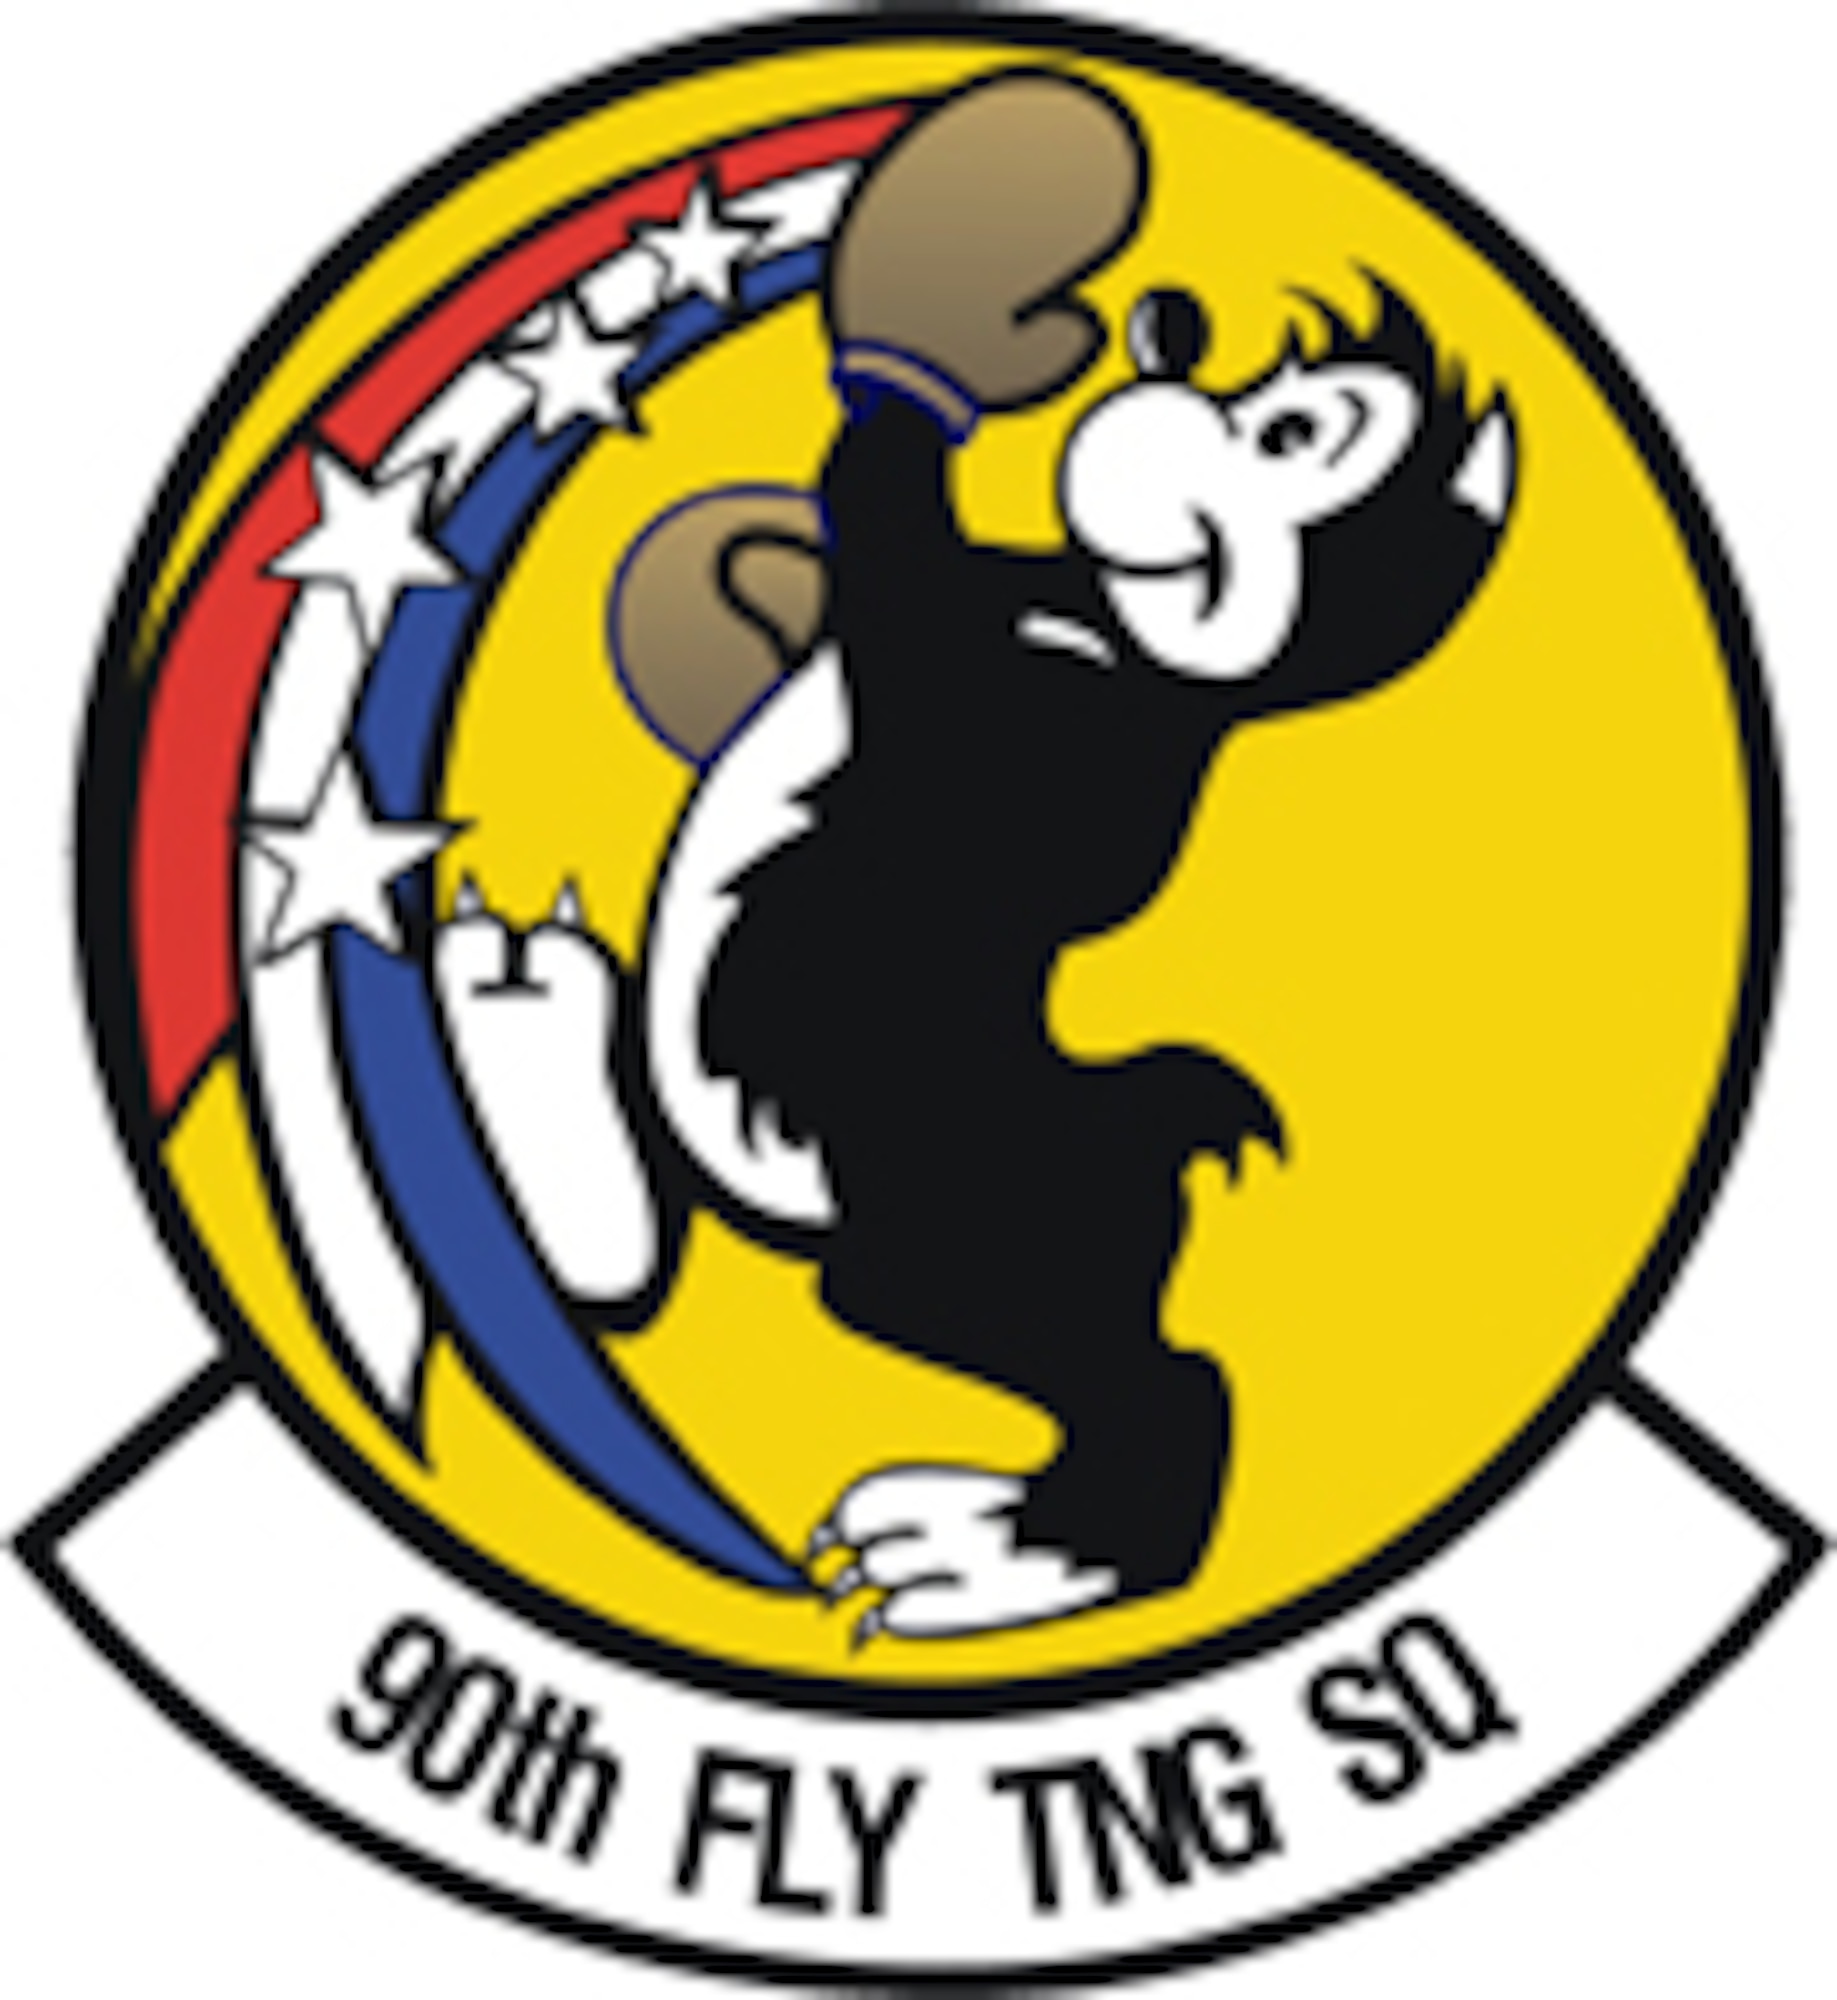 90th Flying Training Squadron